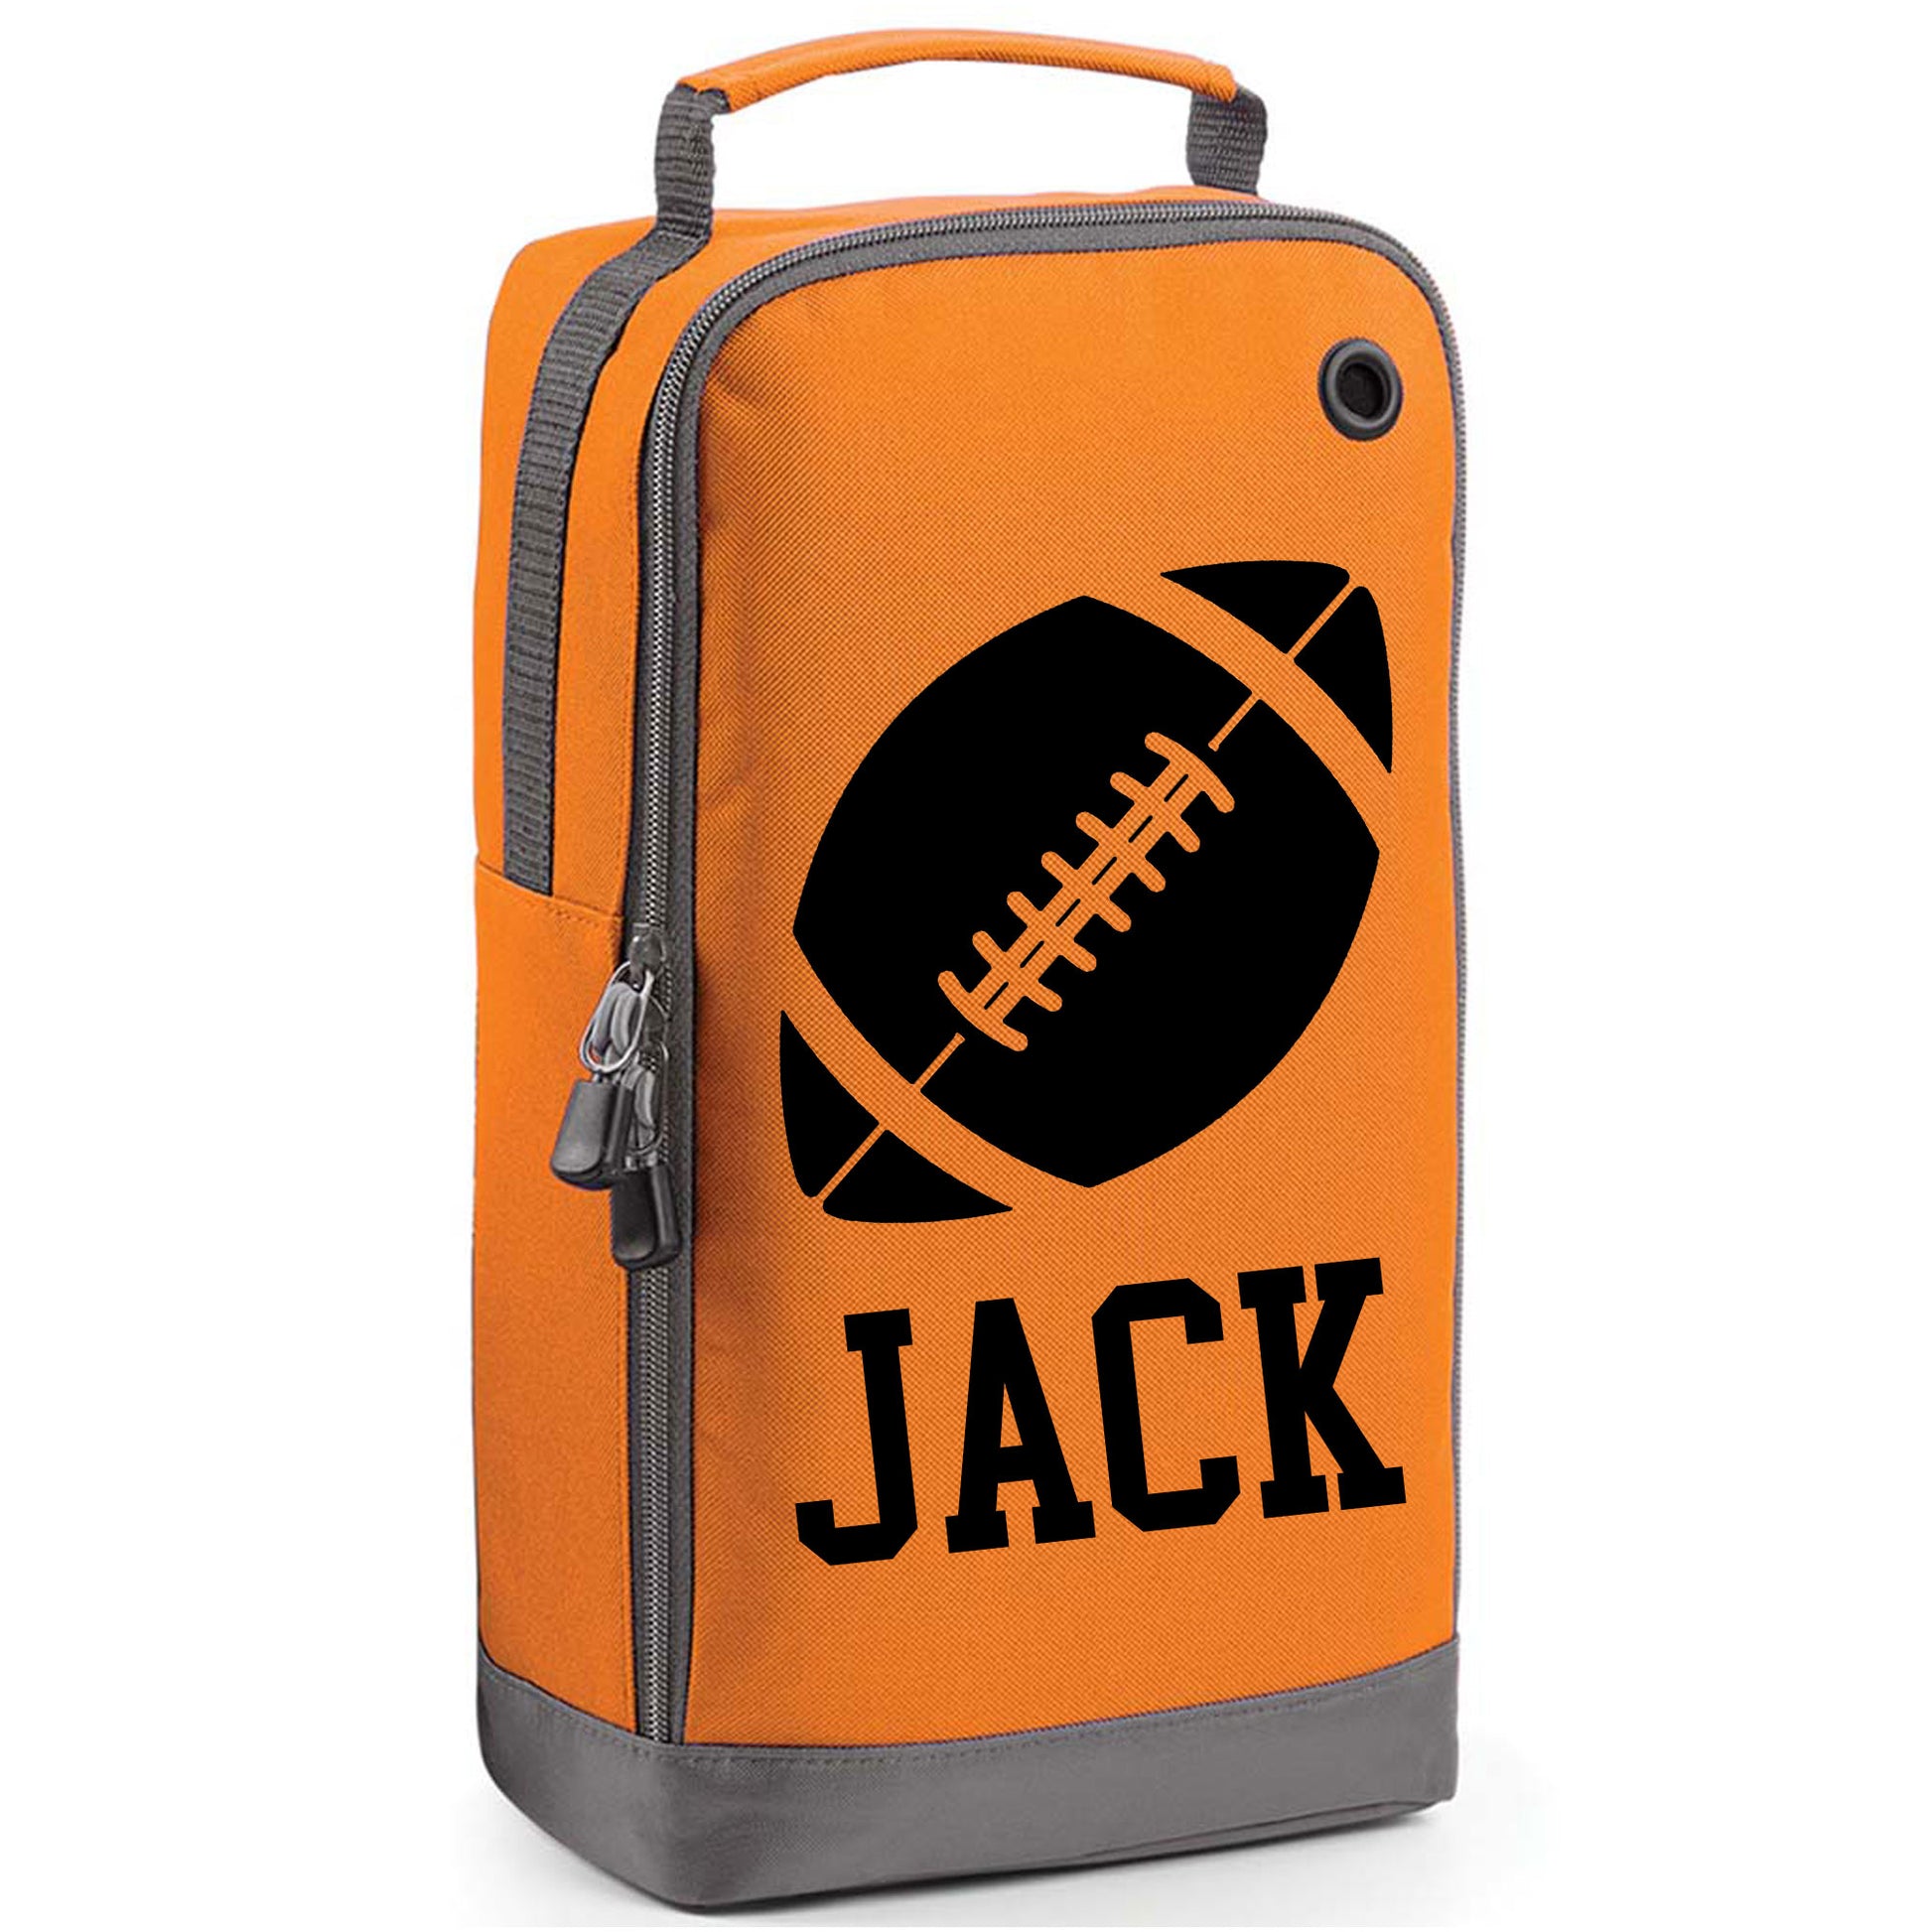 Personalised Rugby/ American Football Boot Bag with Design & Name  - Always Looking Good - Orange  